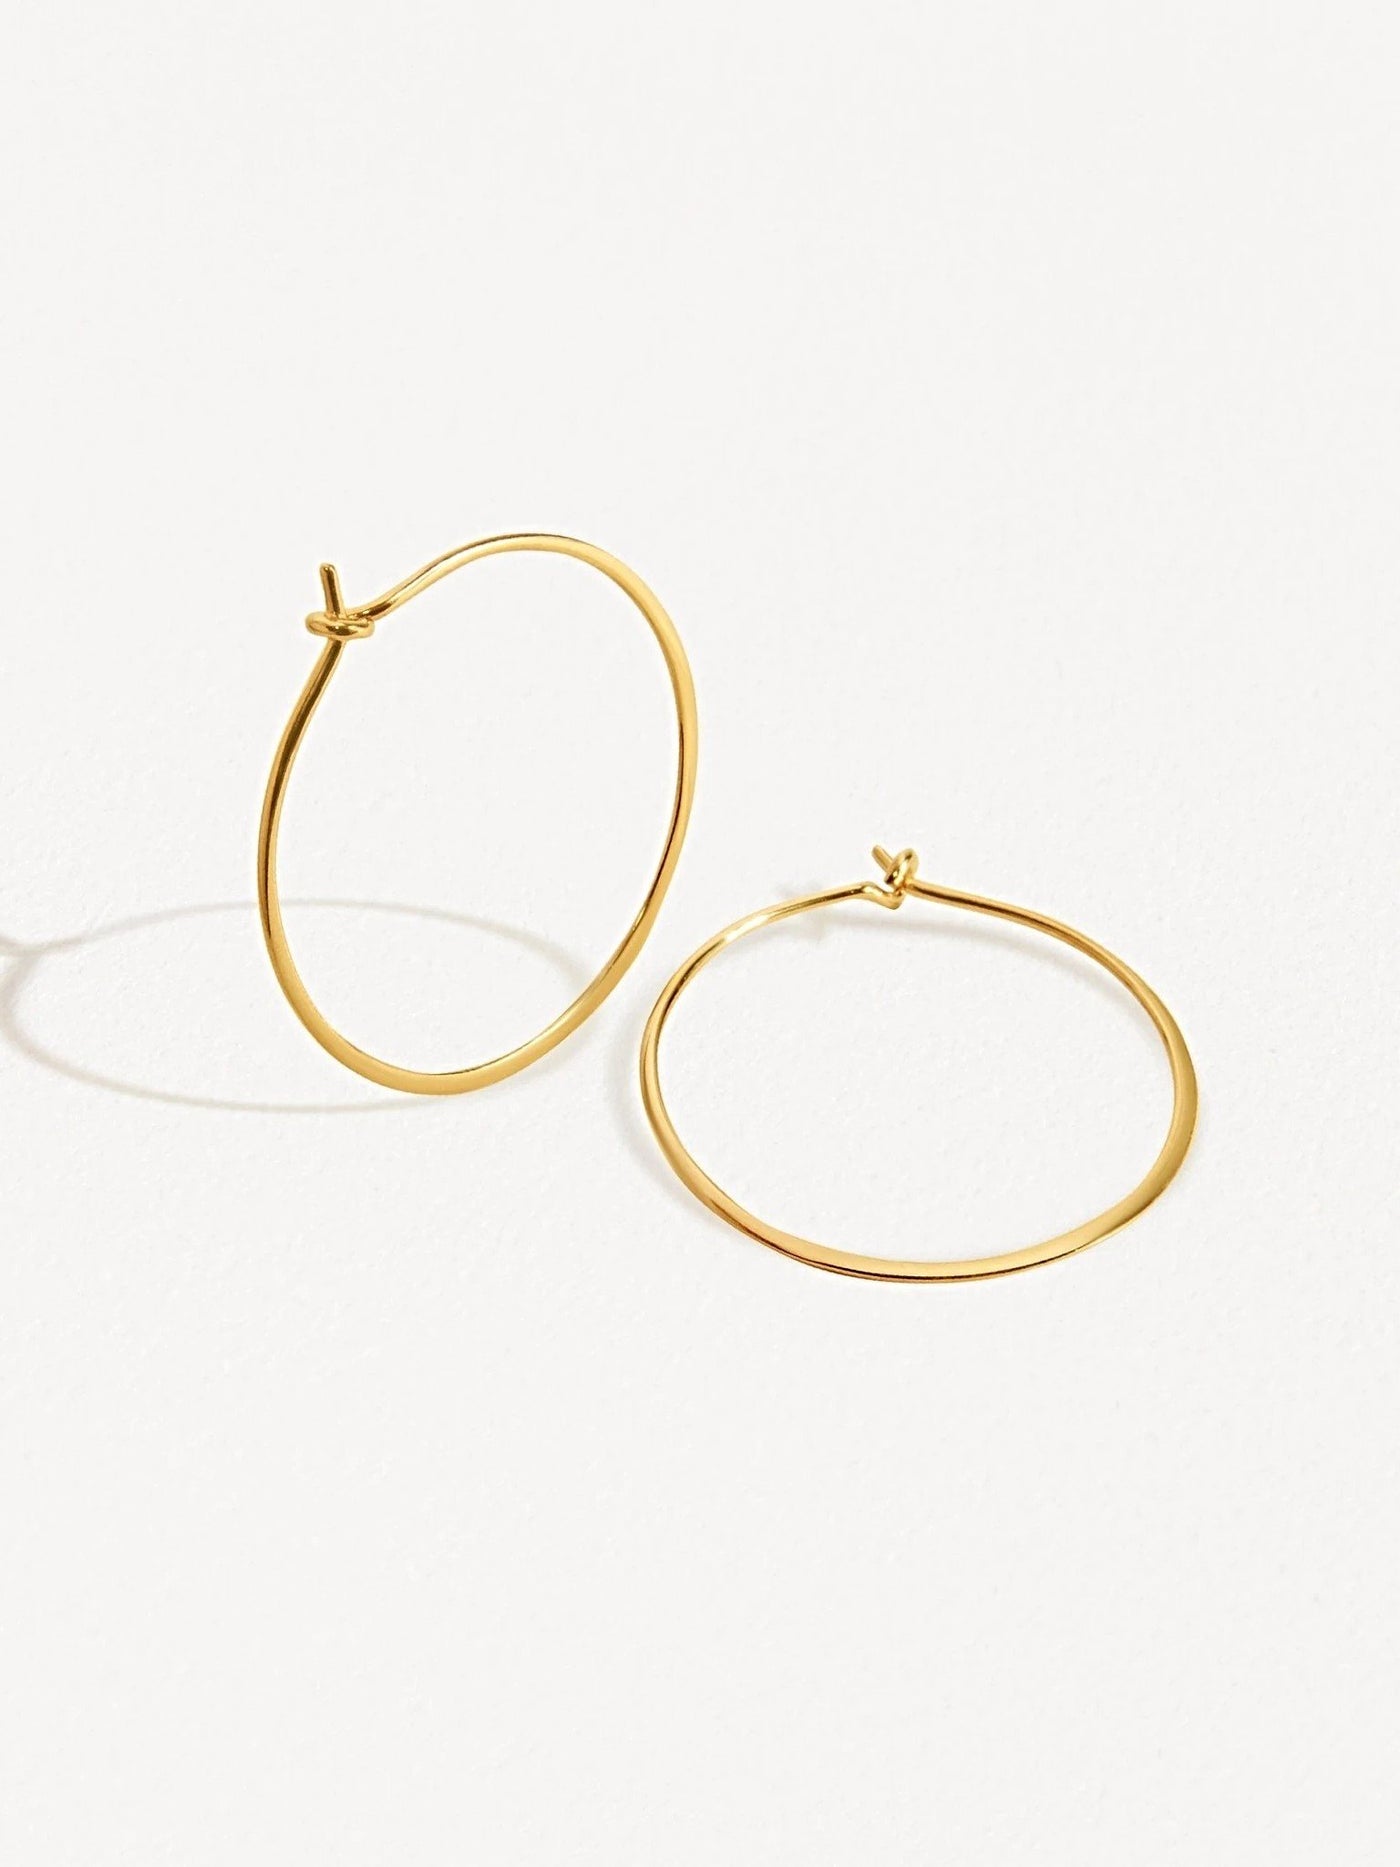 Goldie Hoop Earrings - 14K Yellow Gold FilledBackUpItemsbirthday giftLunai Jewelry